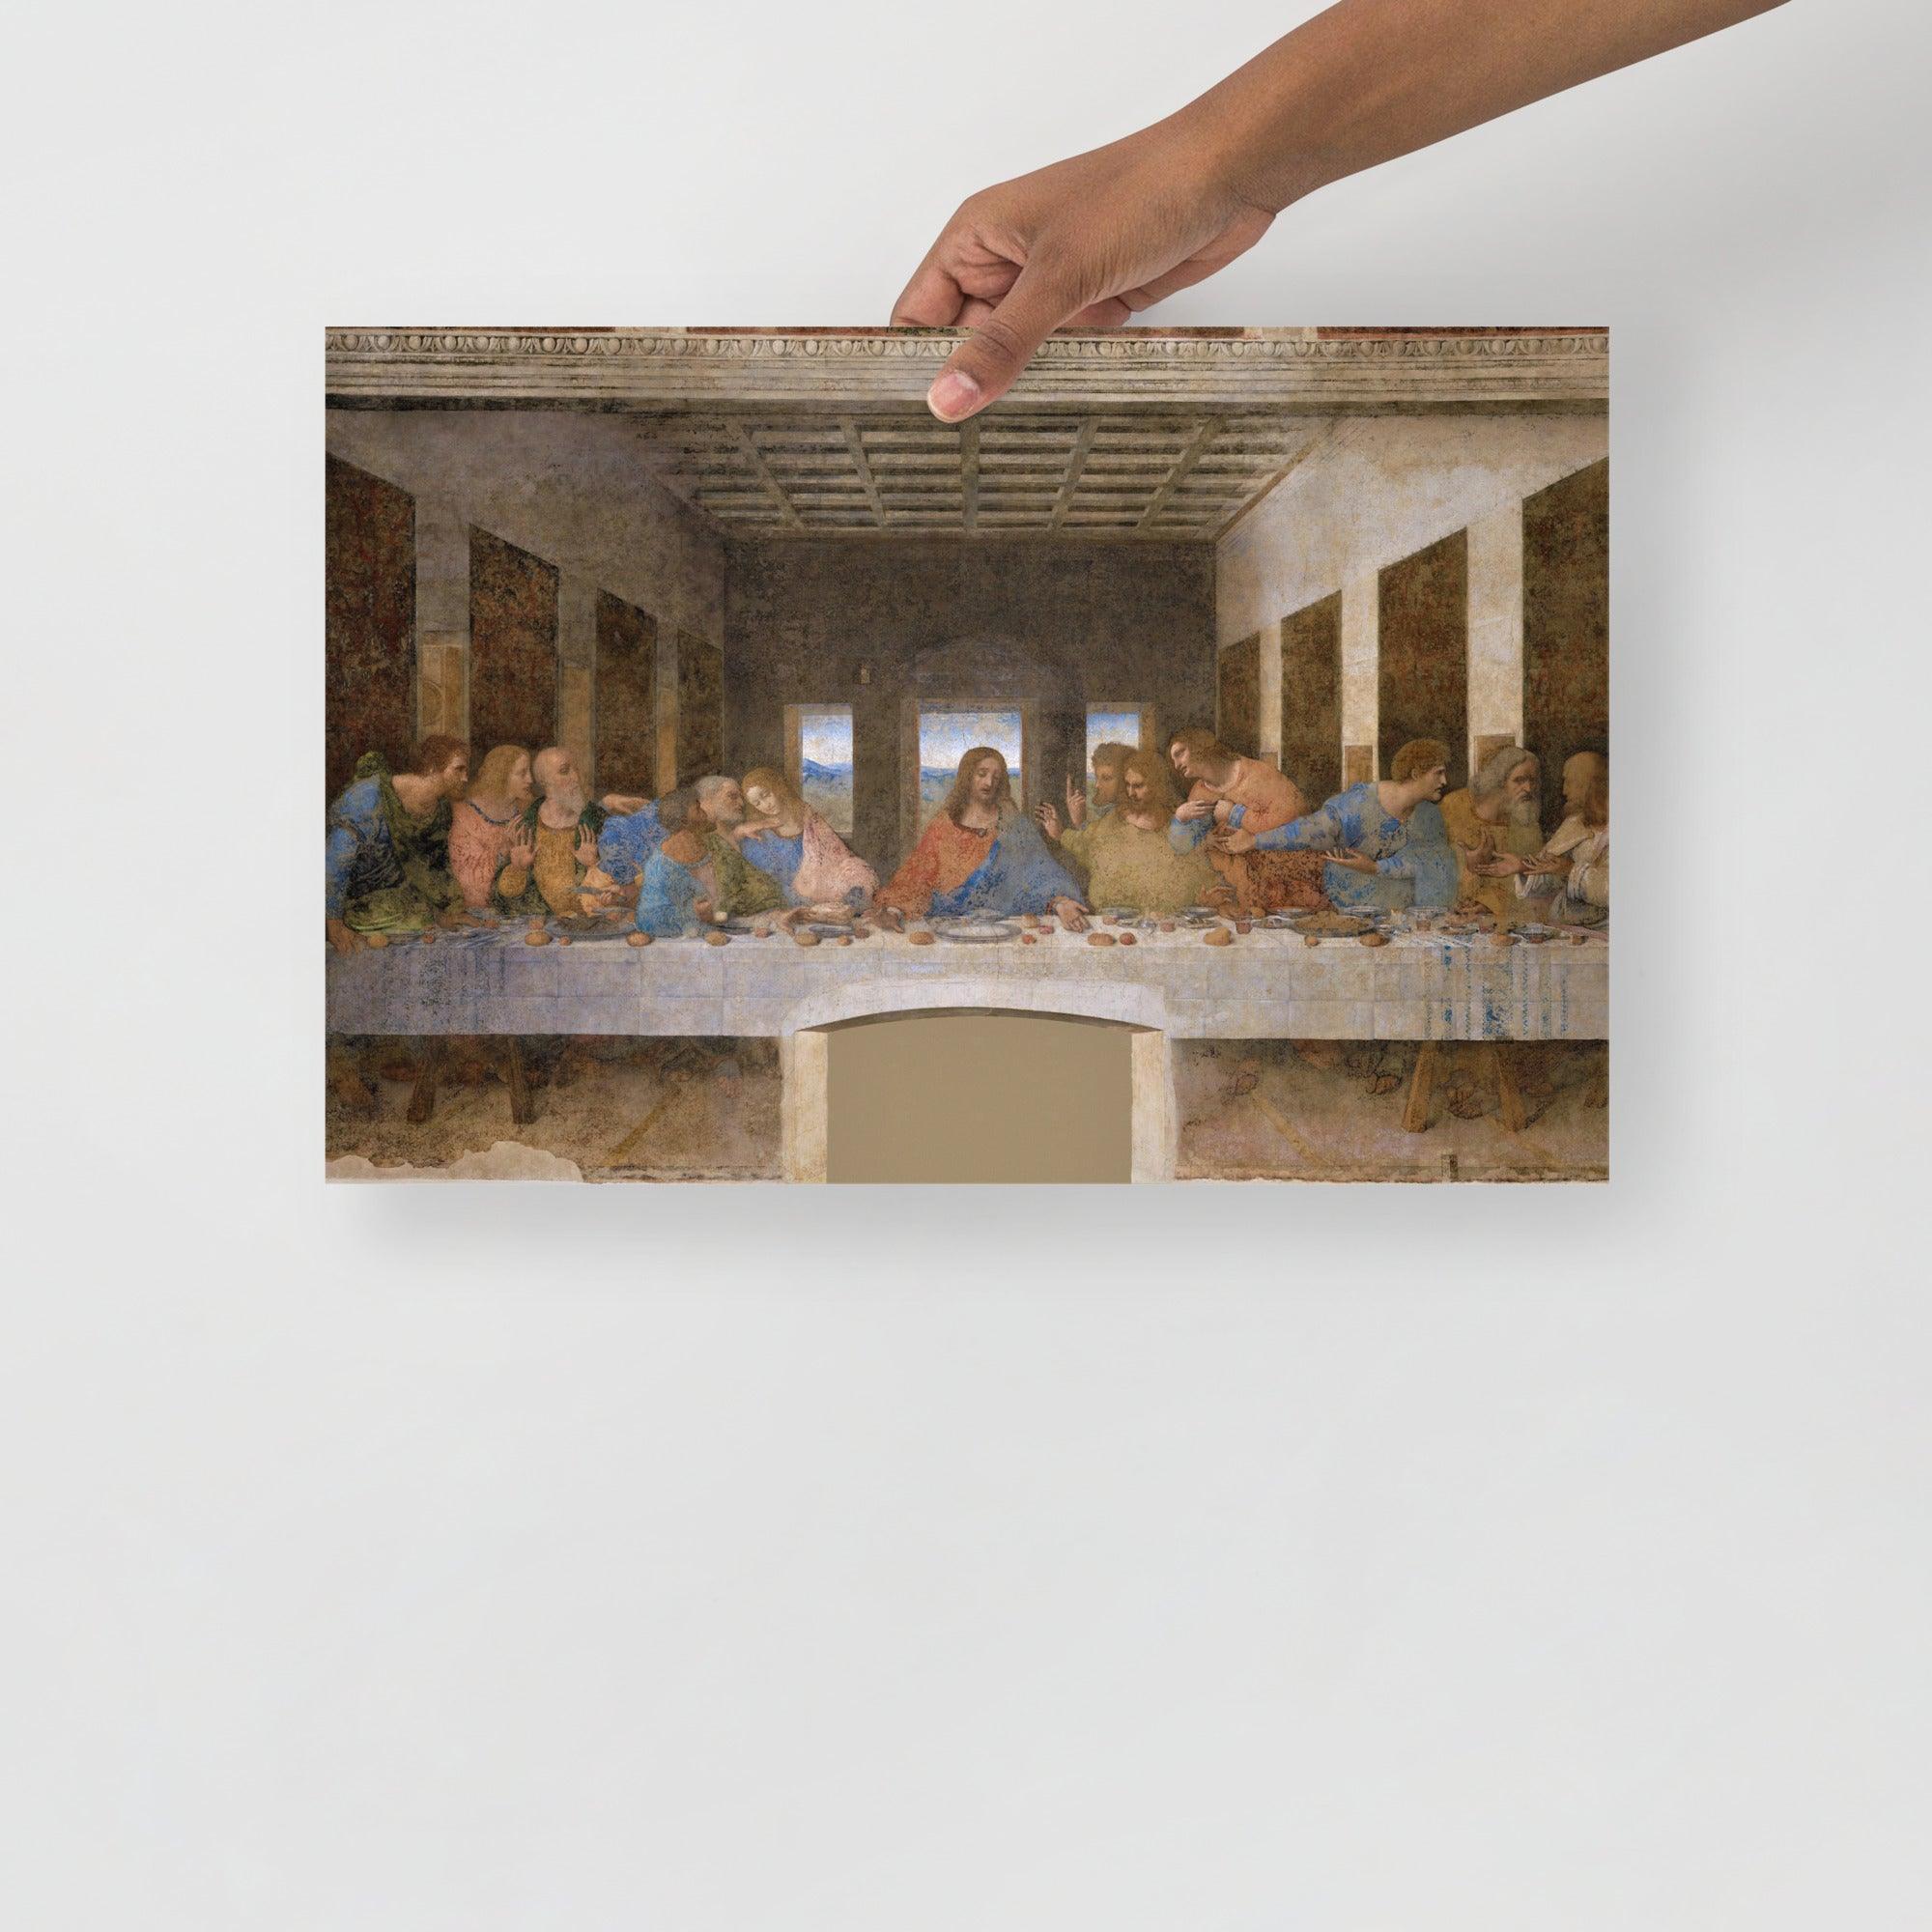 The Last Supper by Leonardo Da Vinci poster on a plain backdrop in size 12x18”.